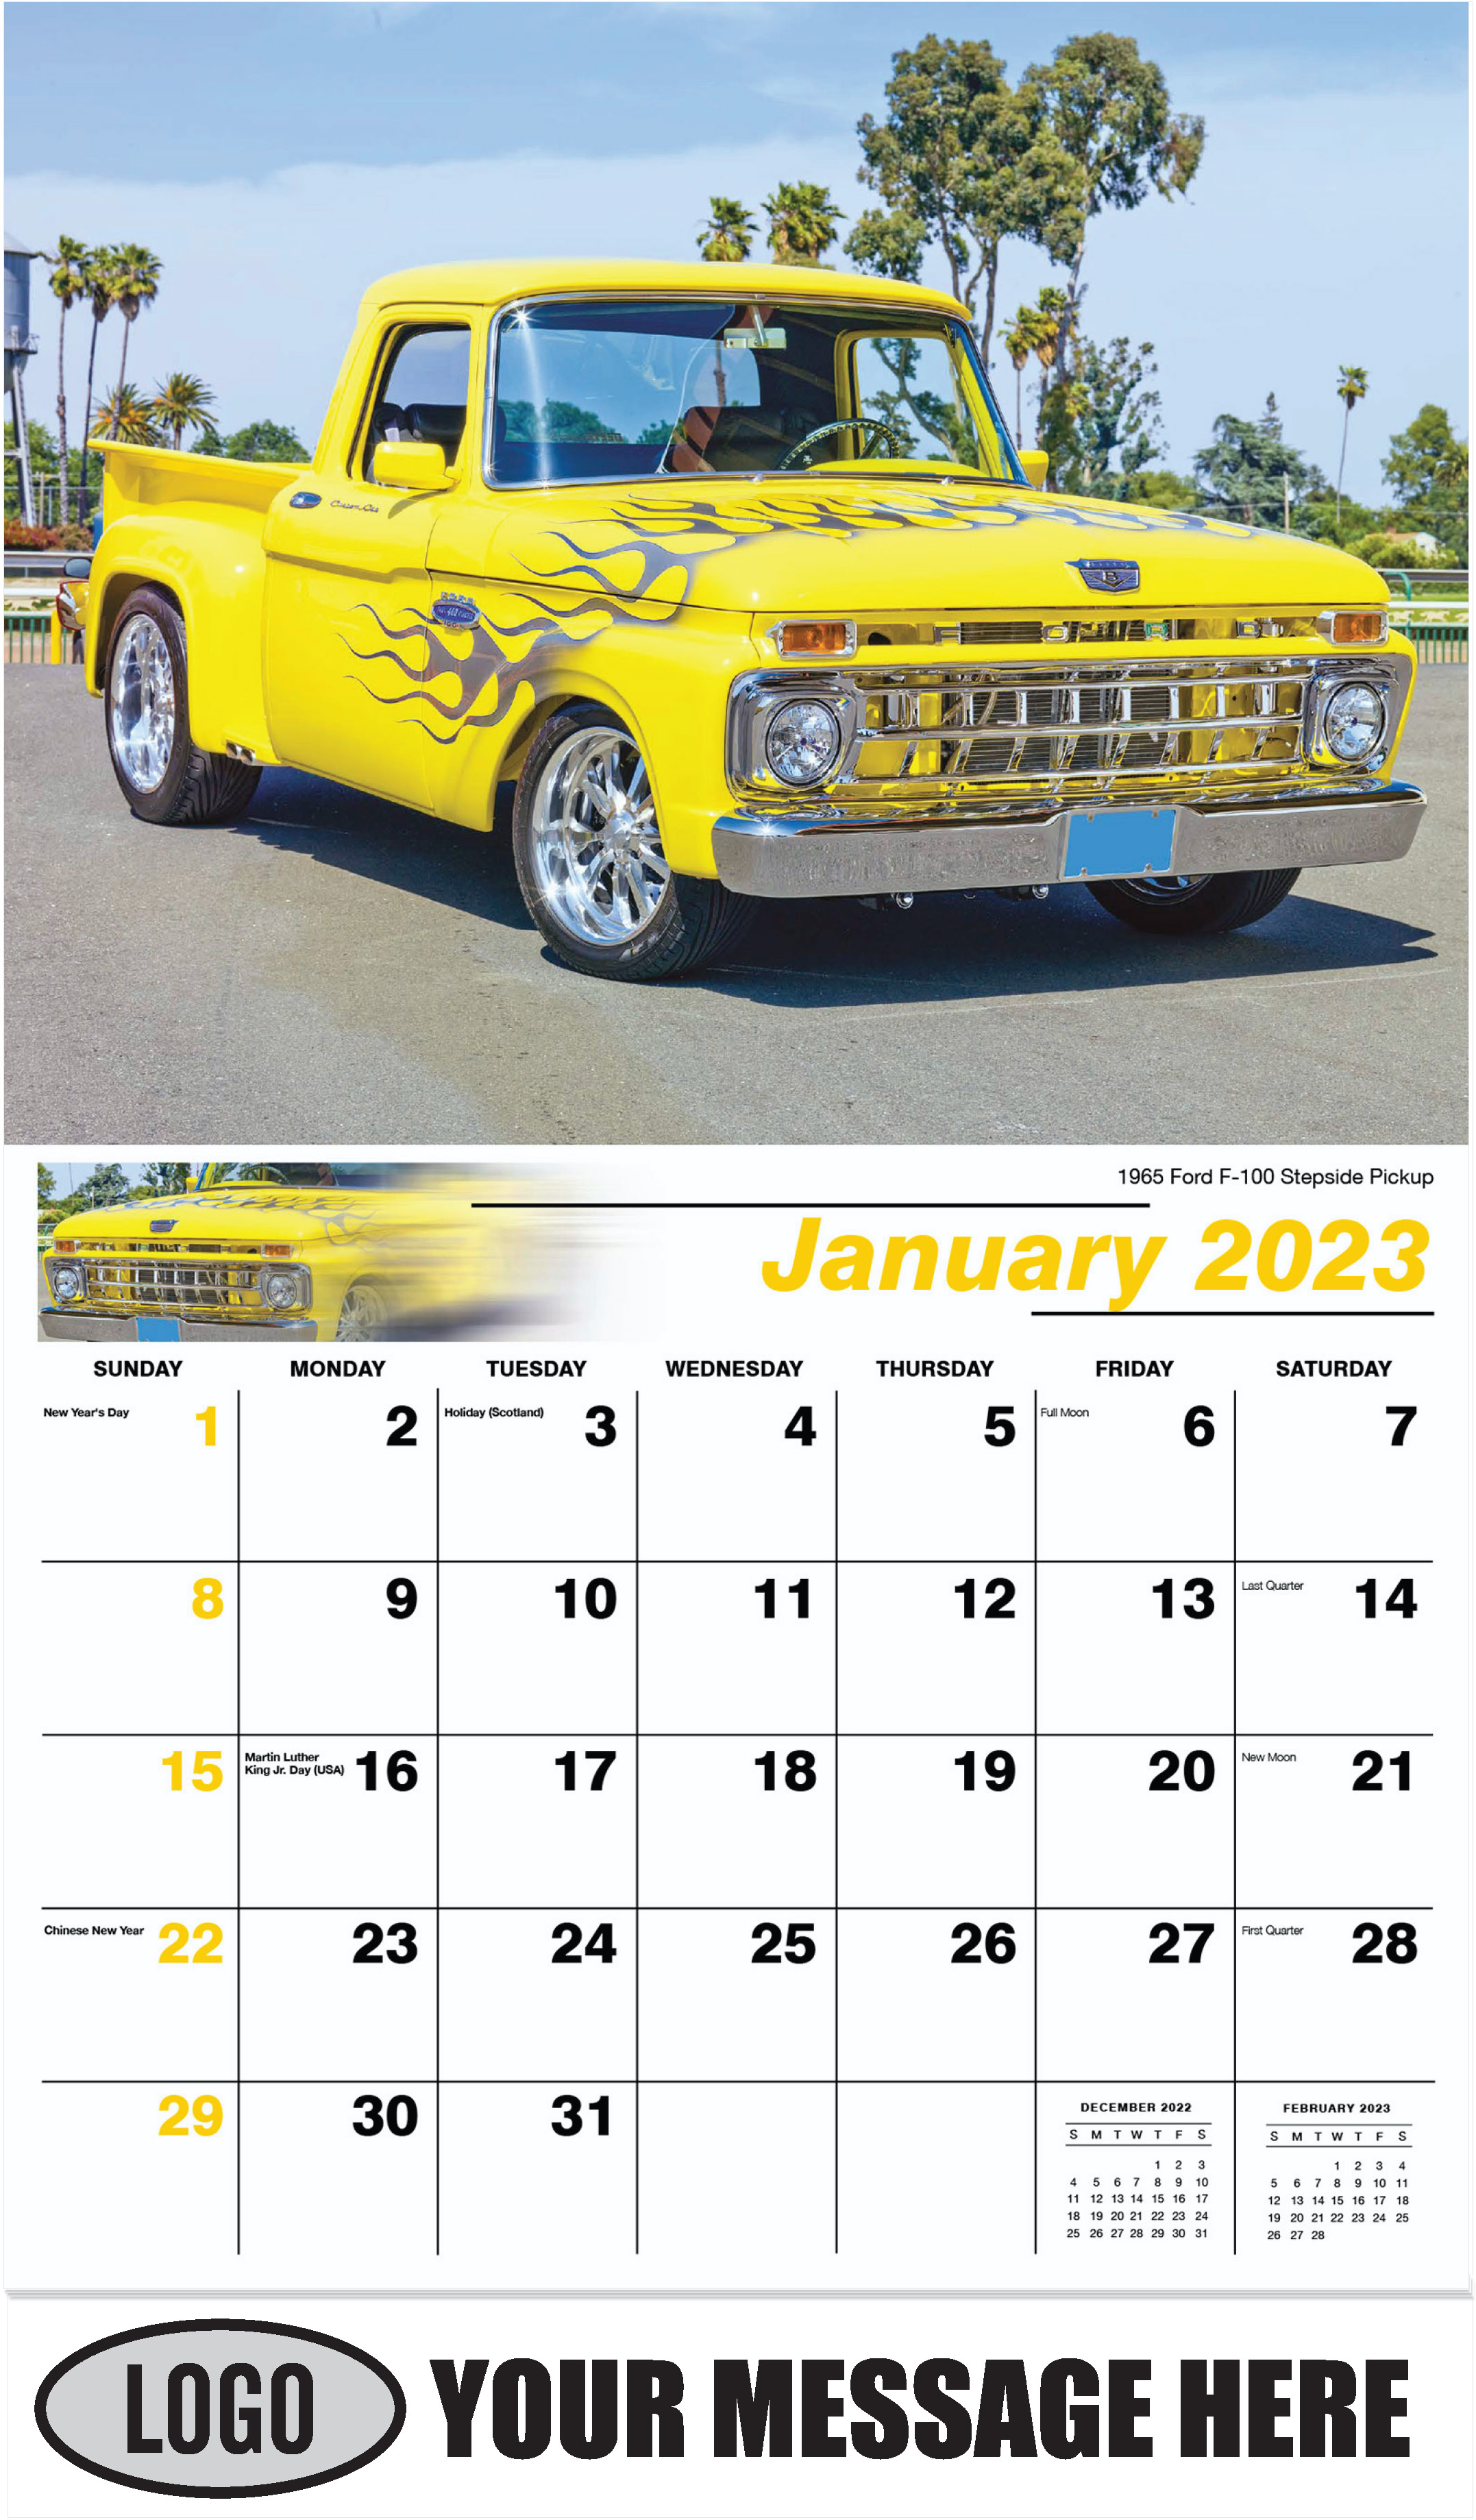 1965 Ford F-100 Stepside Pickup Truck - January - Pumped Up Pickups 2023 Promotional Calendar